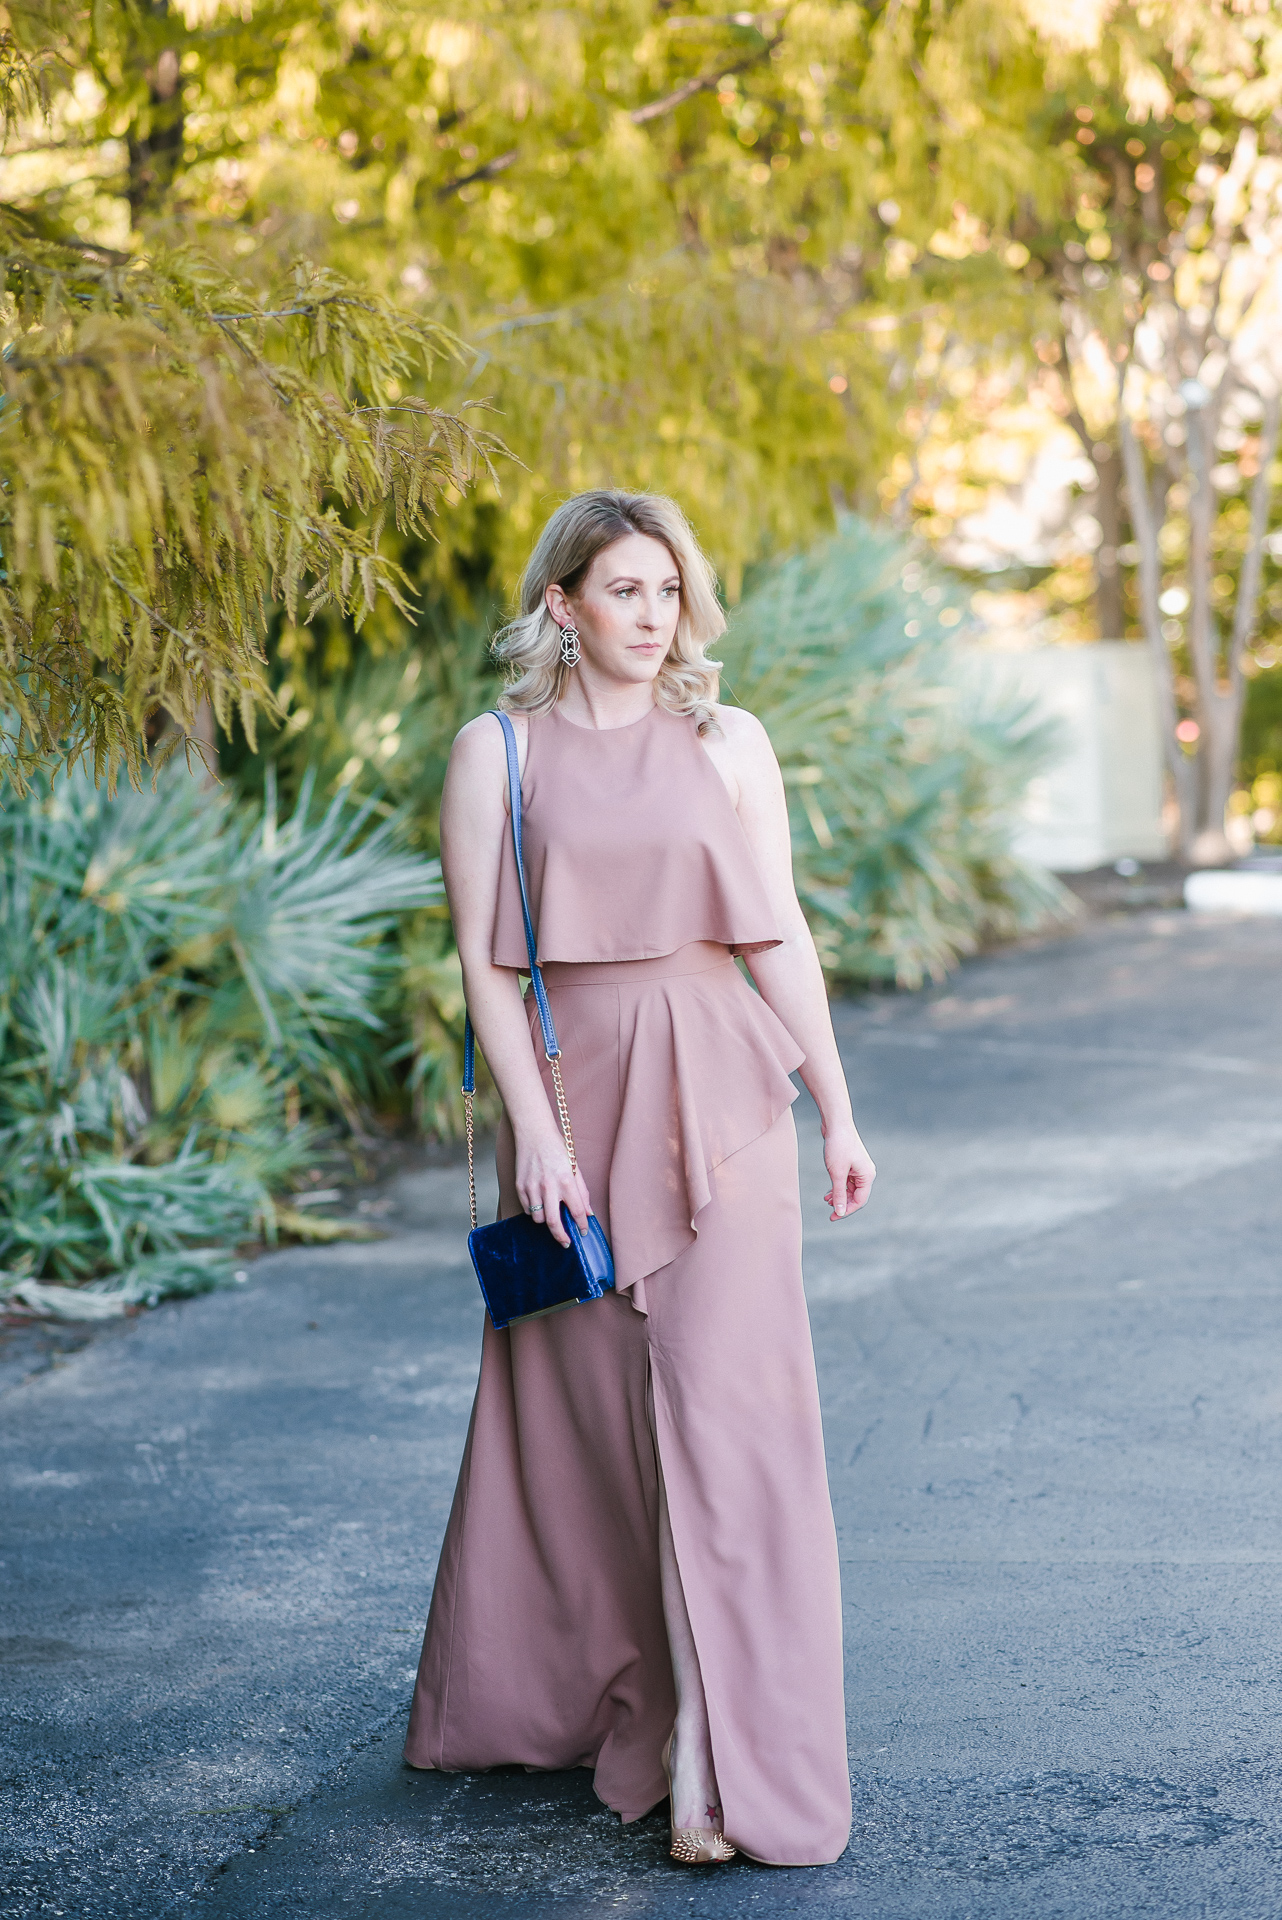 Fall Wedding Guest Dress Under $100 by Houston fashion blogger Gracefully Sassy